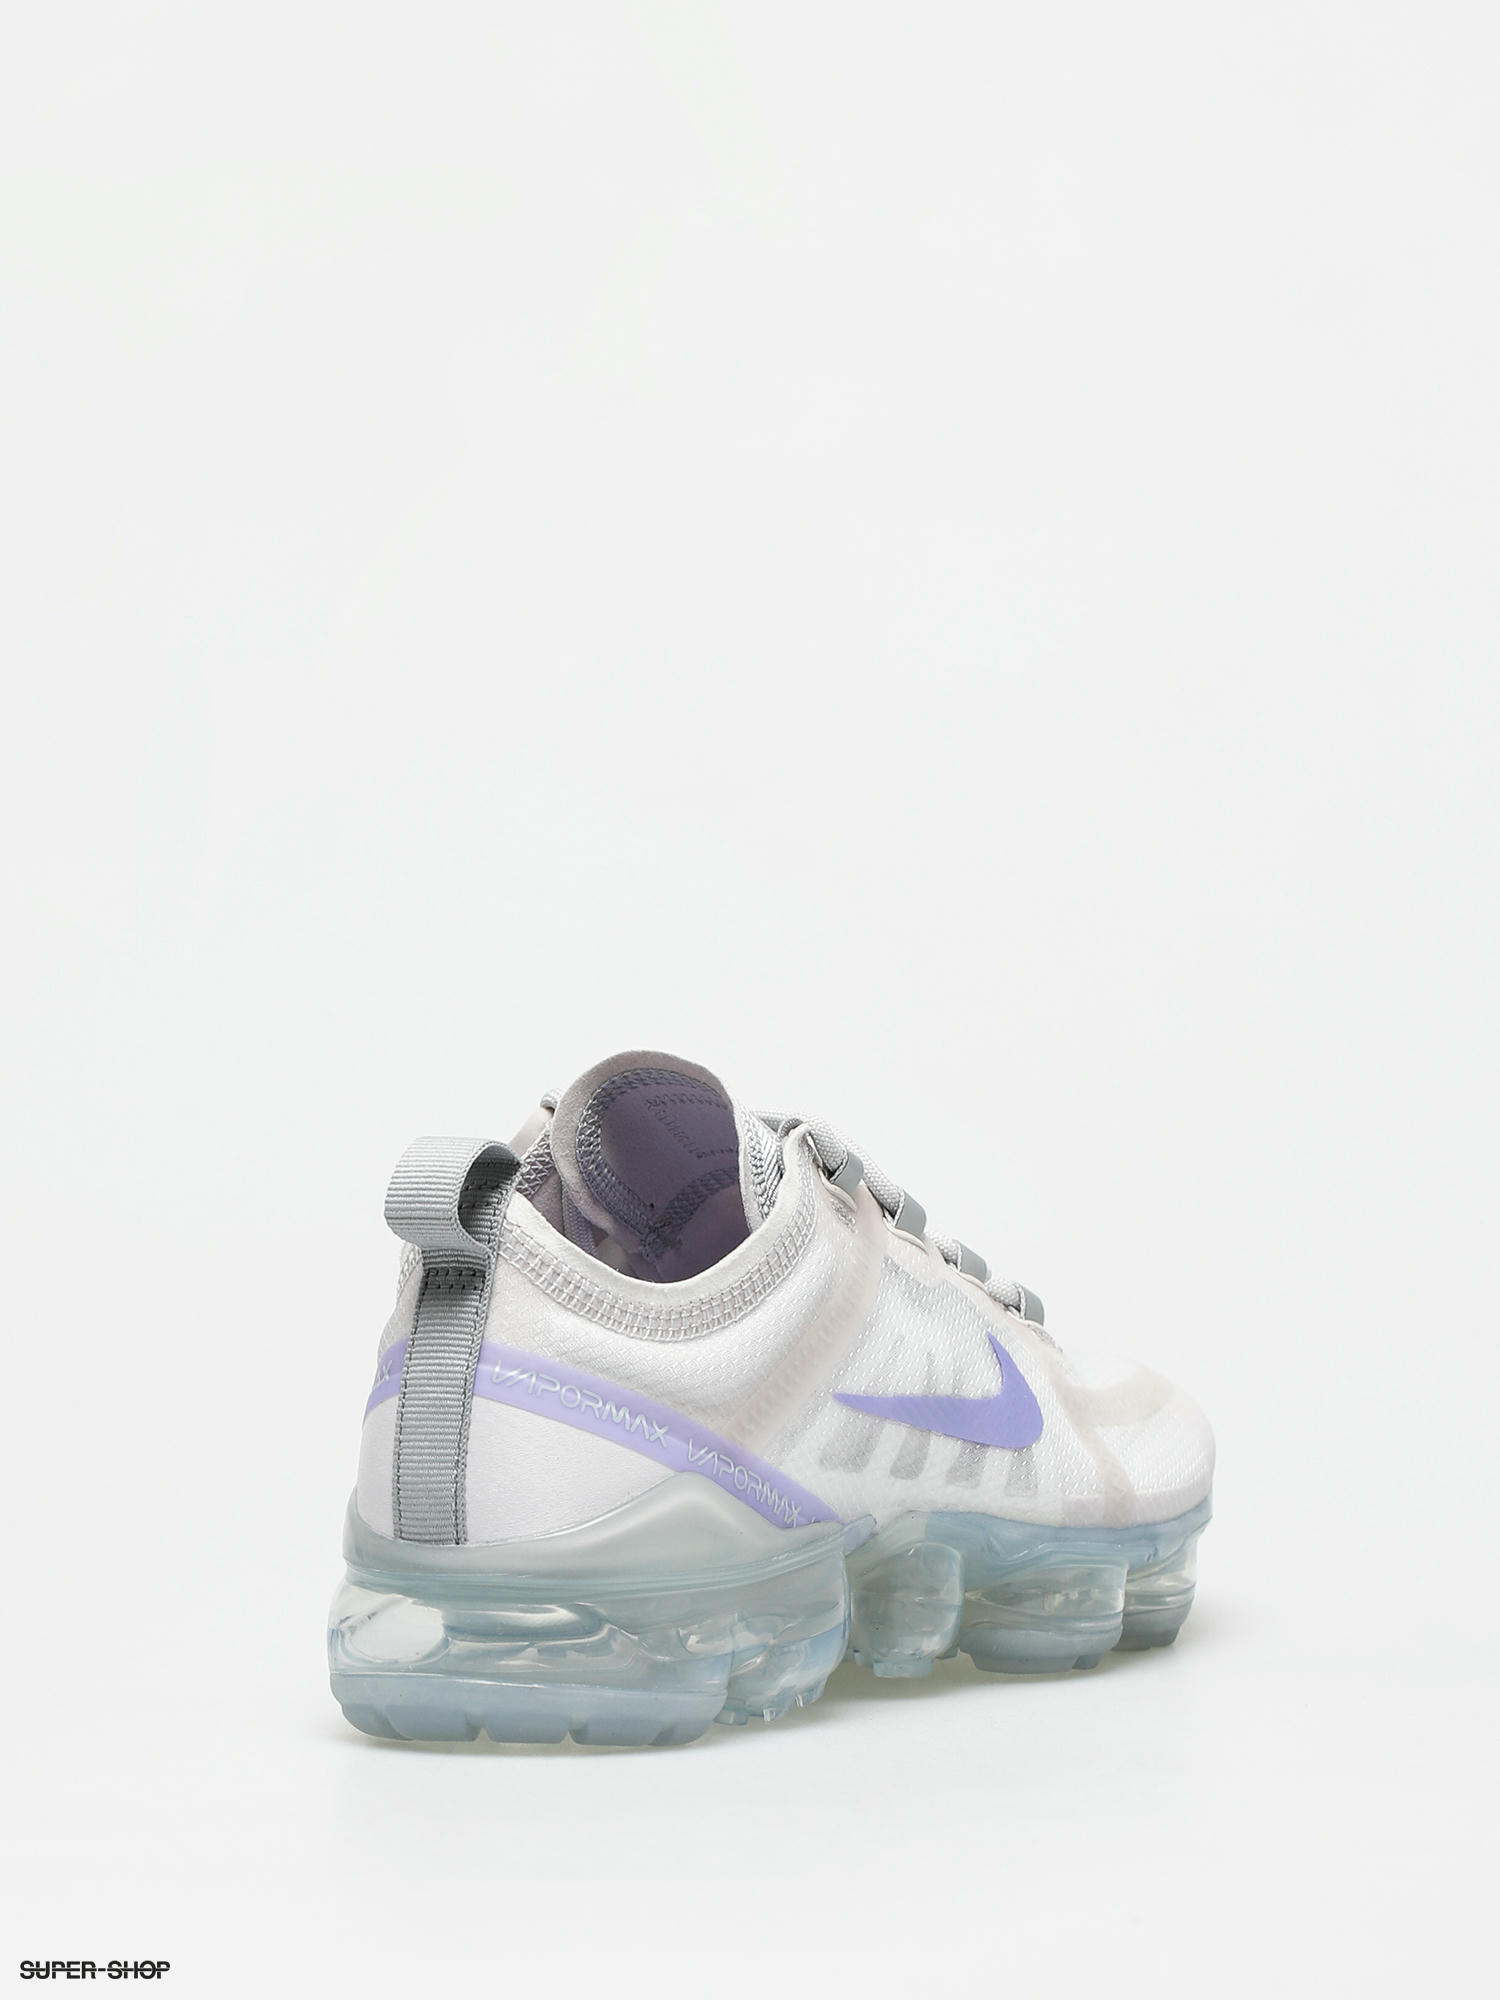 Nike Air 2019 Se Shoes (vast grey/purple agate wolf grey)